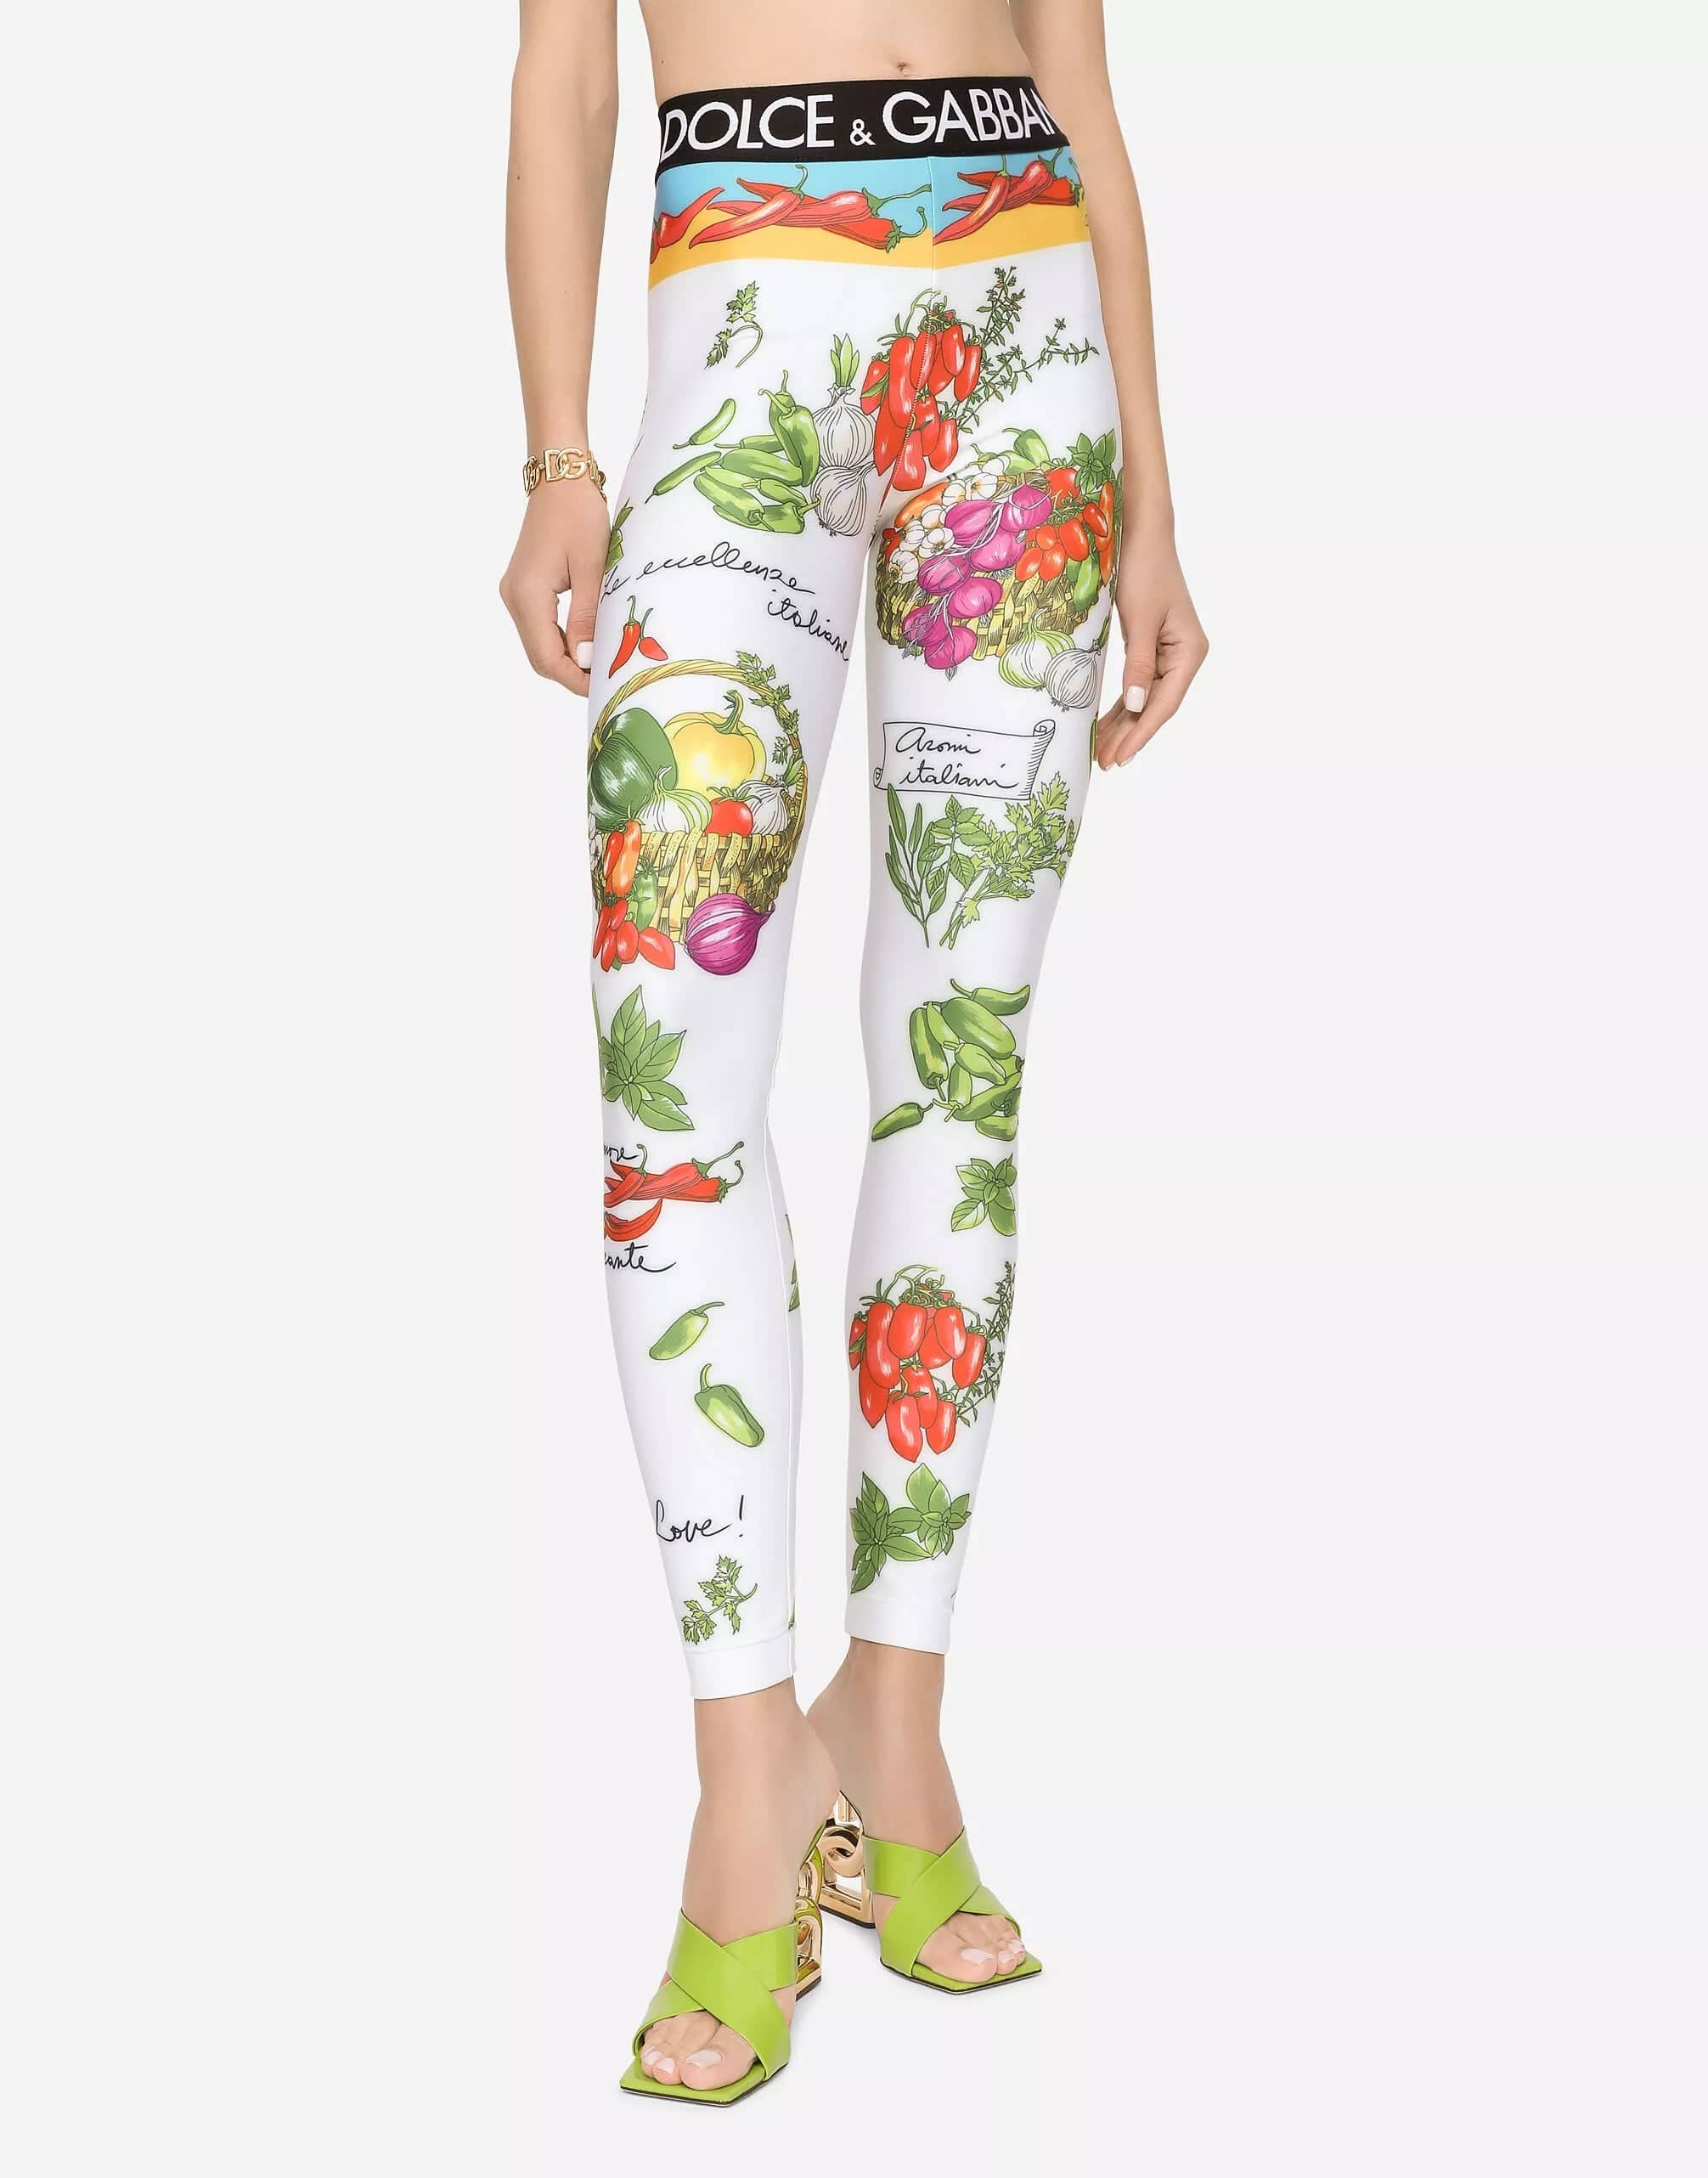 Dolce & Gabbana Vegetable-Print Jersey Leggings